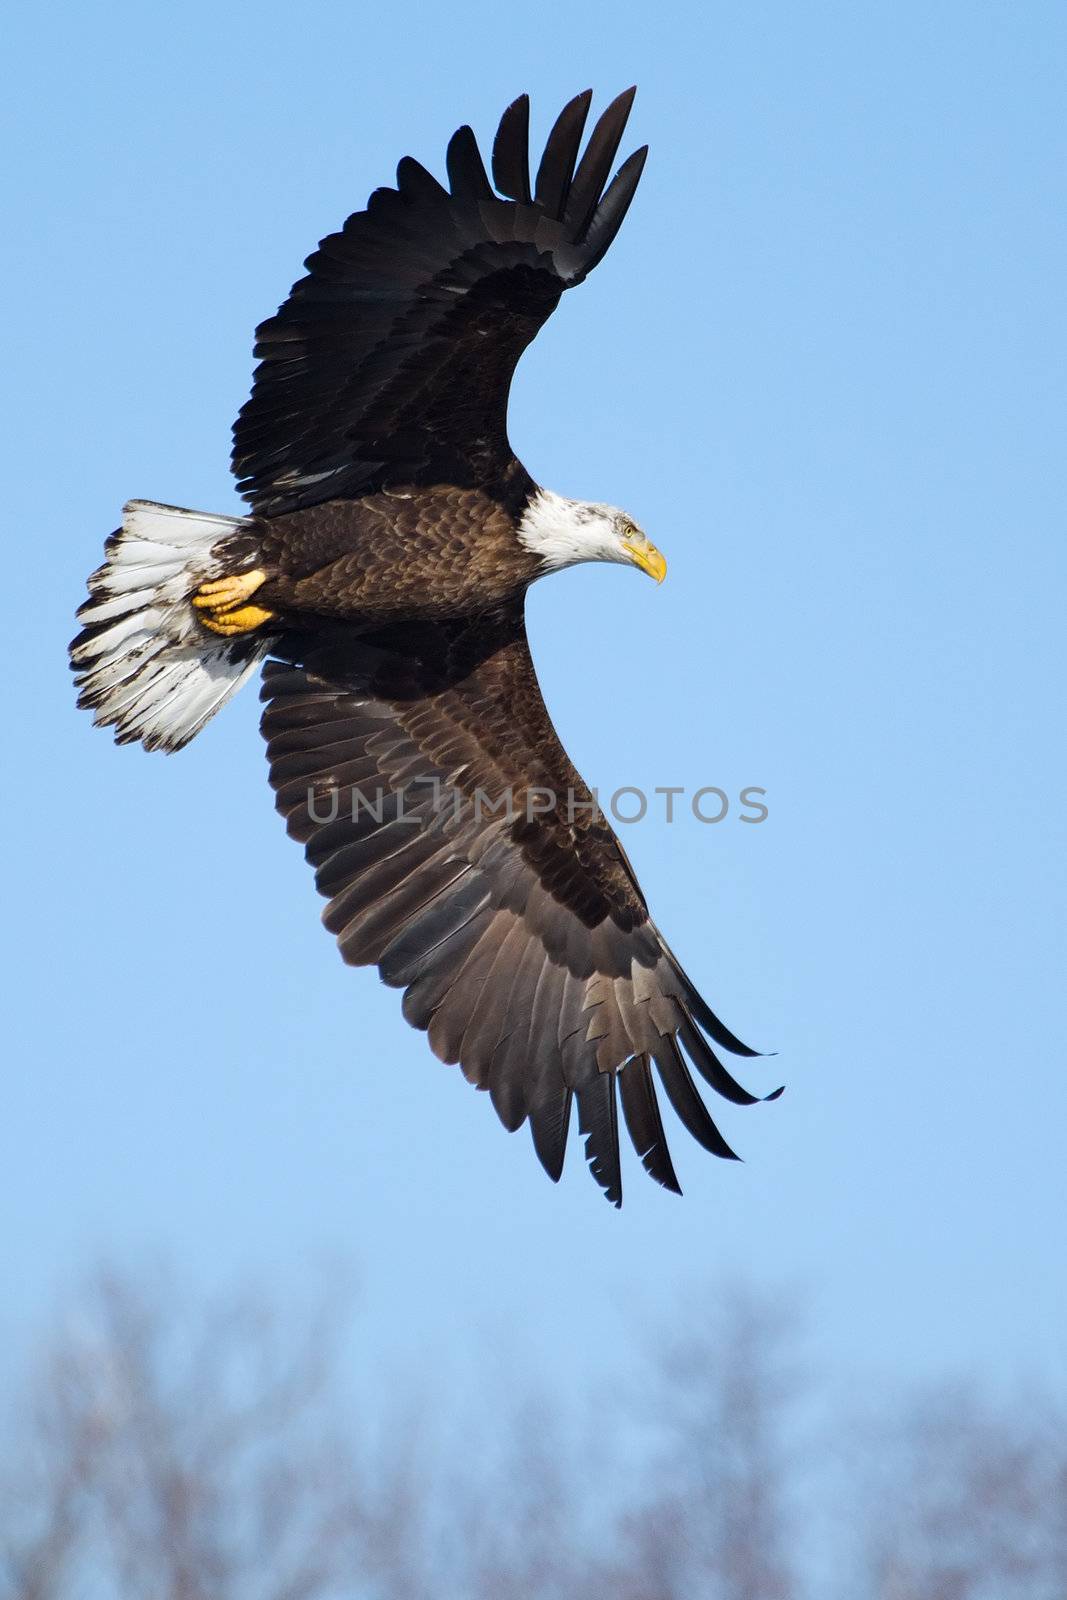 American Bald Eagle flying against a blue sky.